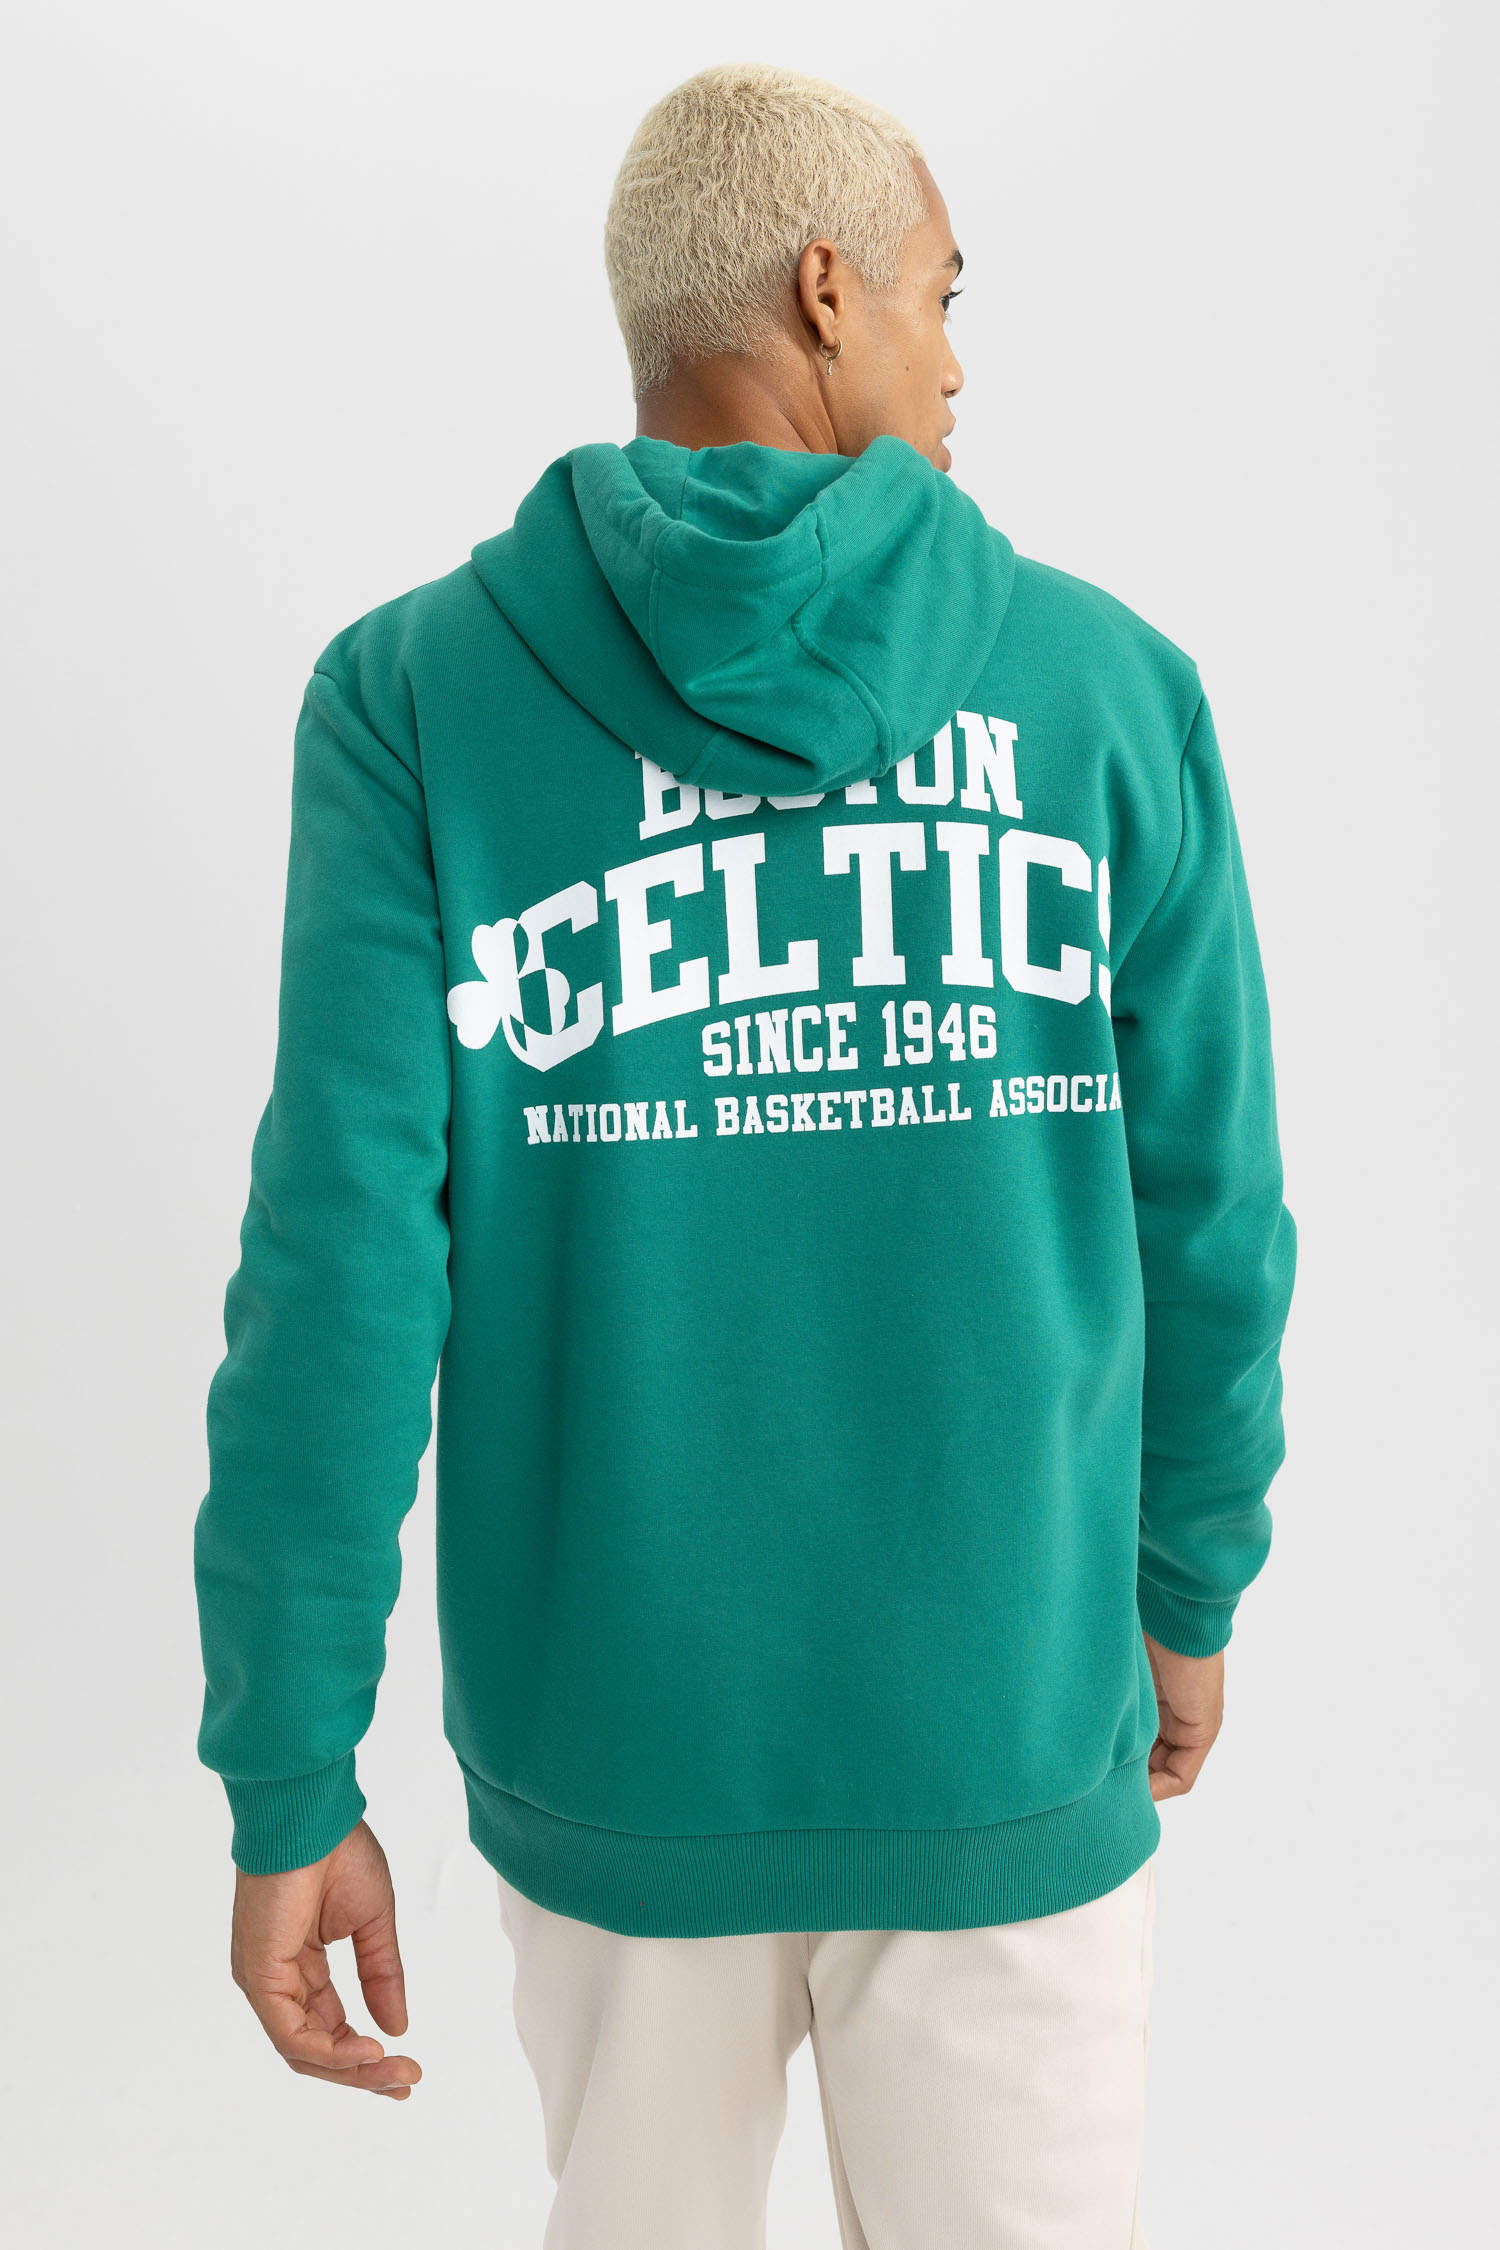 Nba Basketball 1946 Boston Celtics Shirt, hoodie, longsleeve, sweater